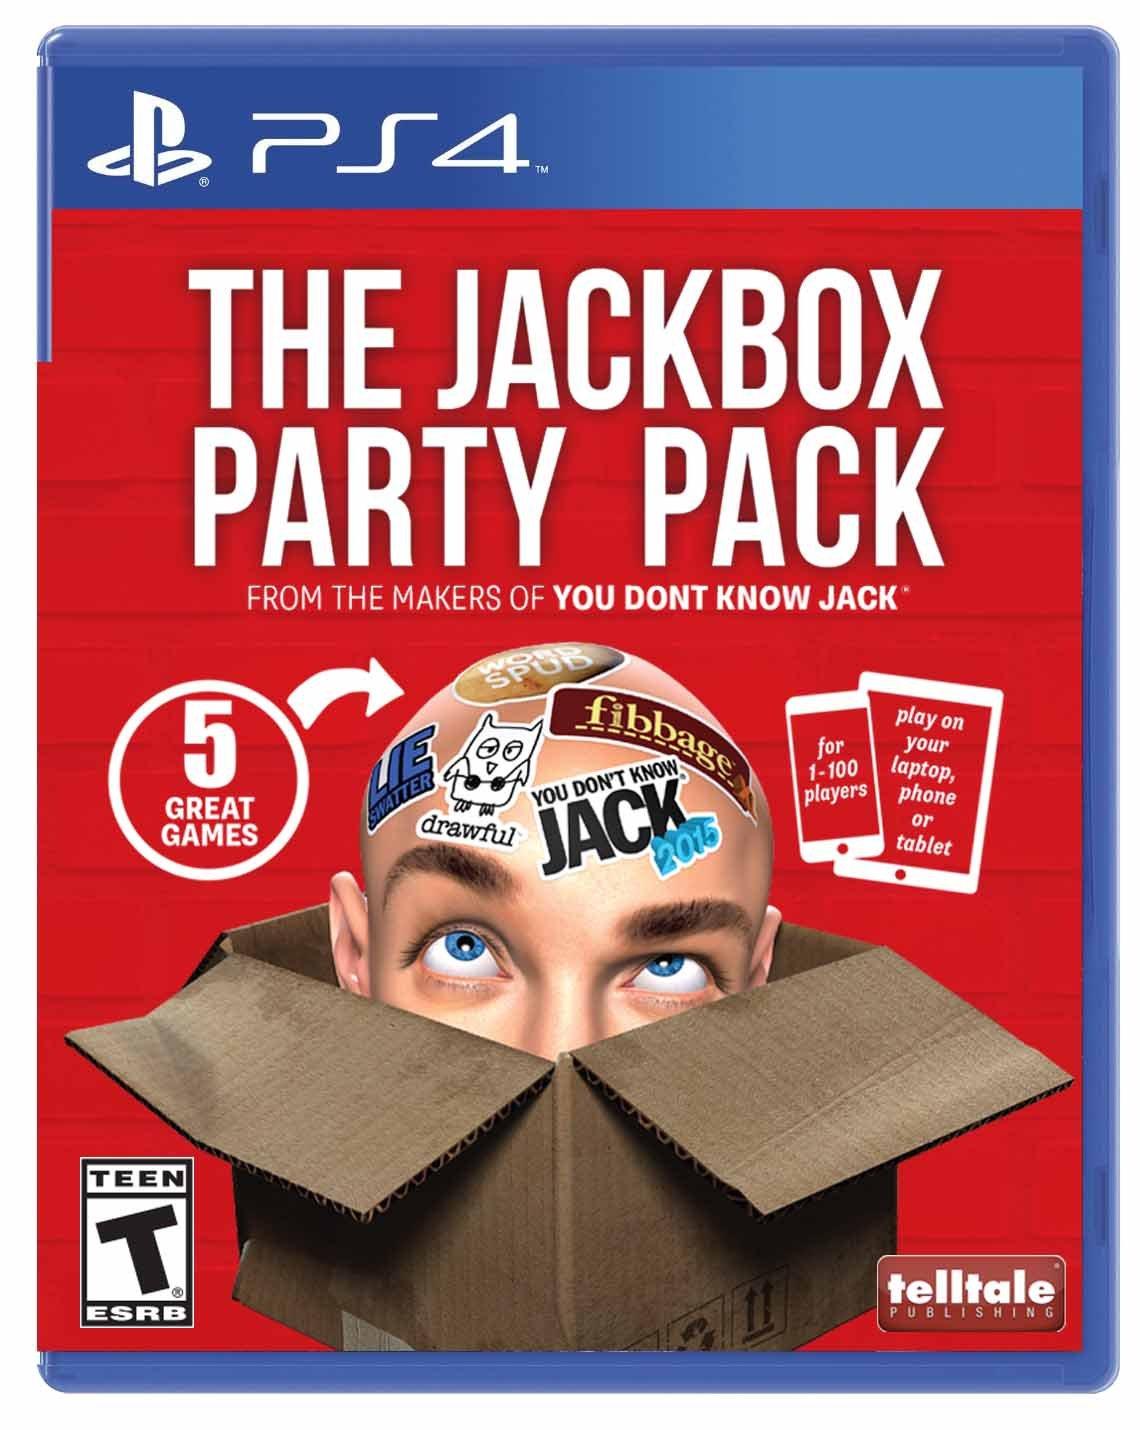 You've seen Jackbox and Jeffbox, now here comes ROCKBOX! : r